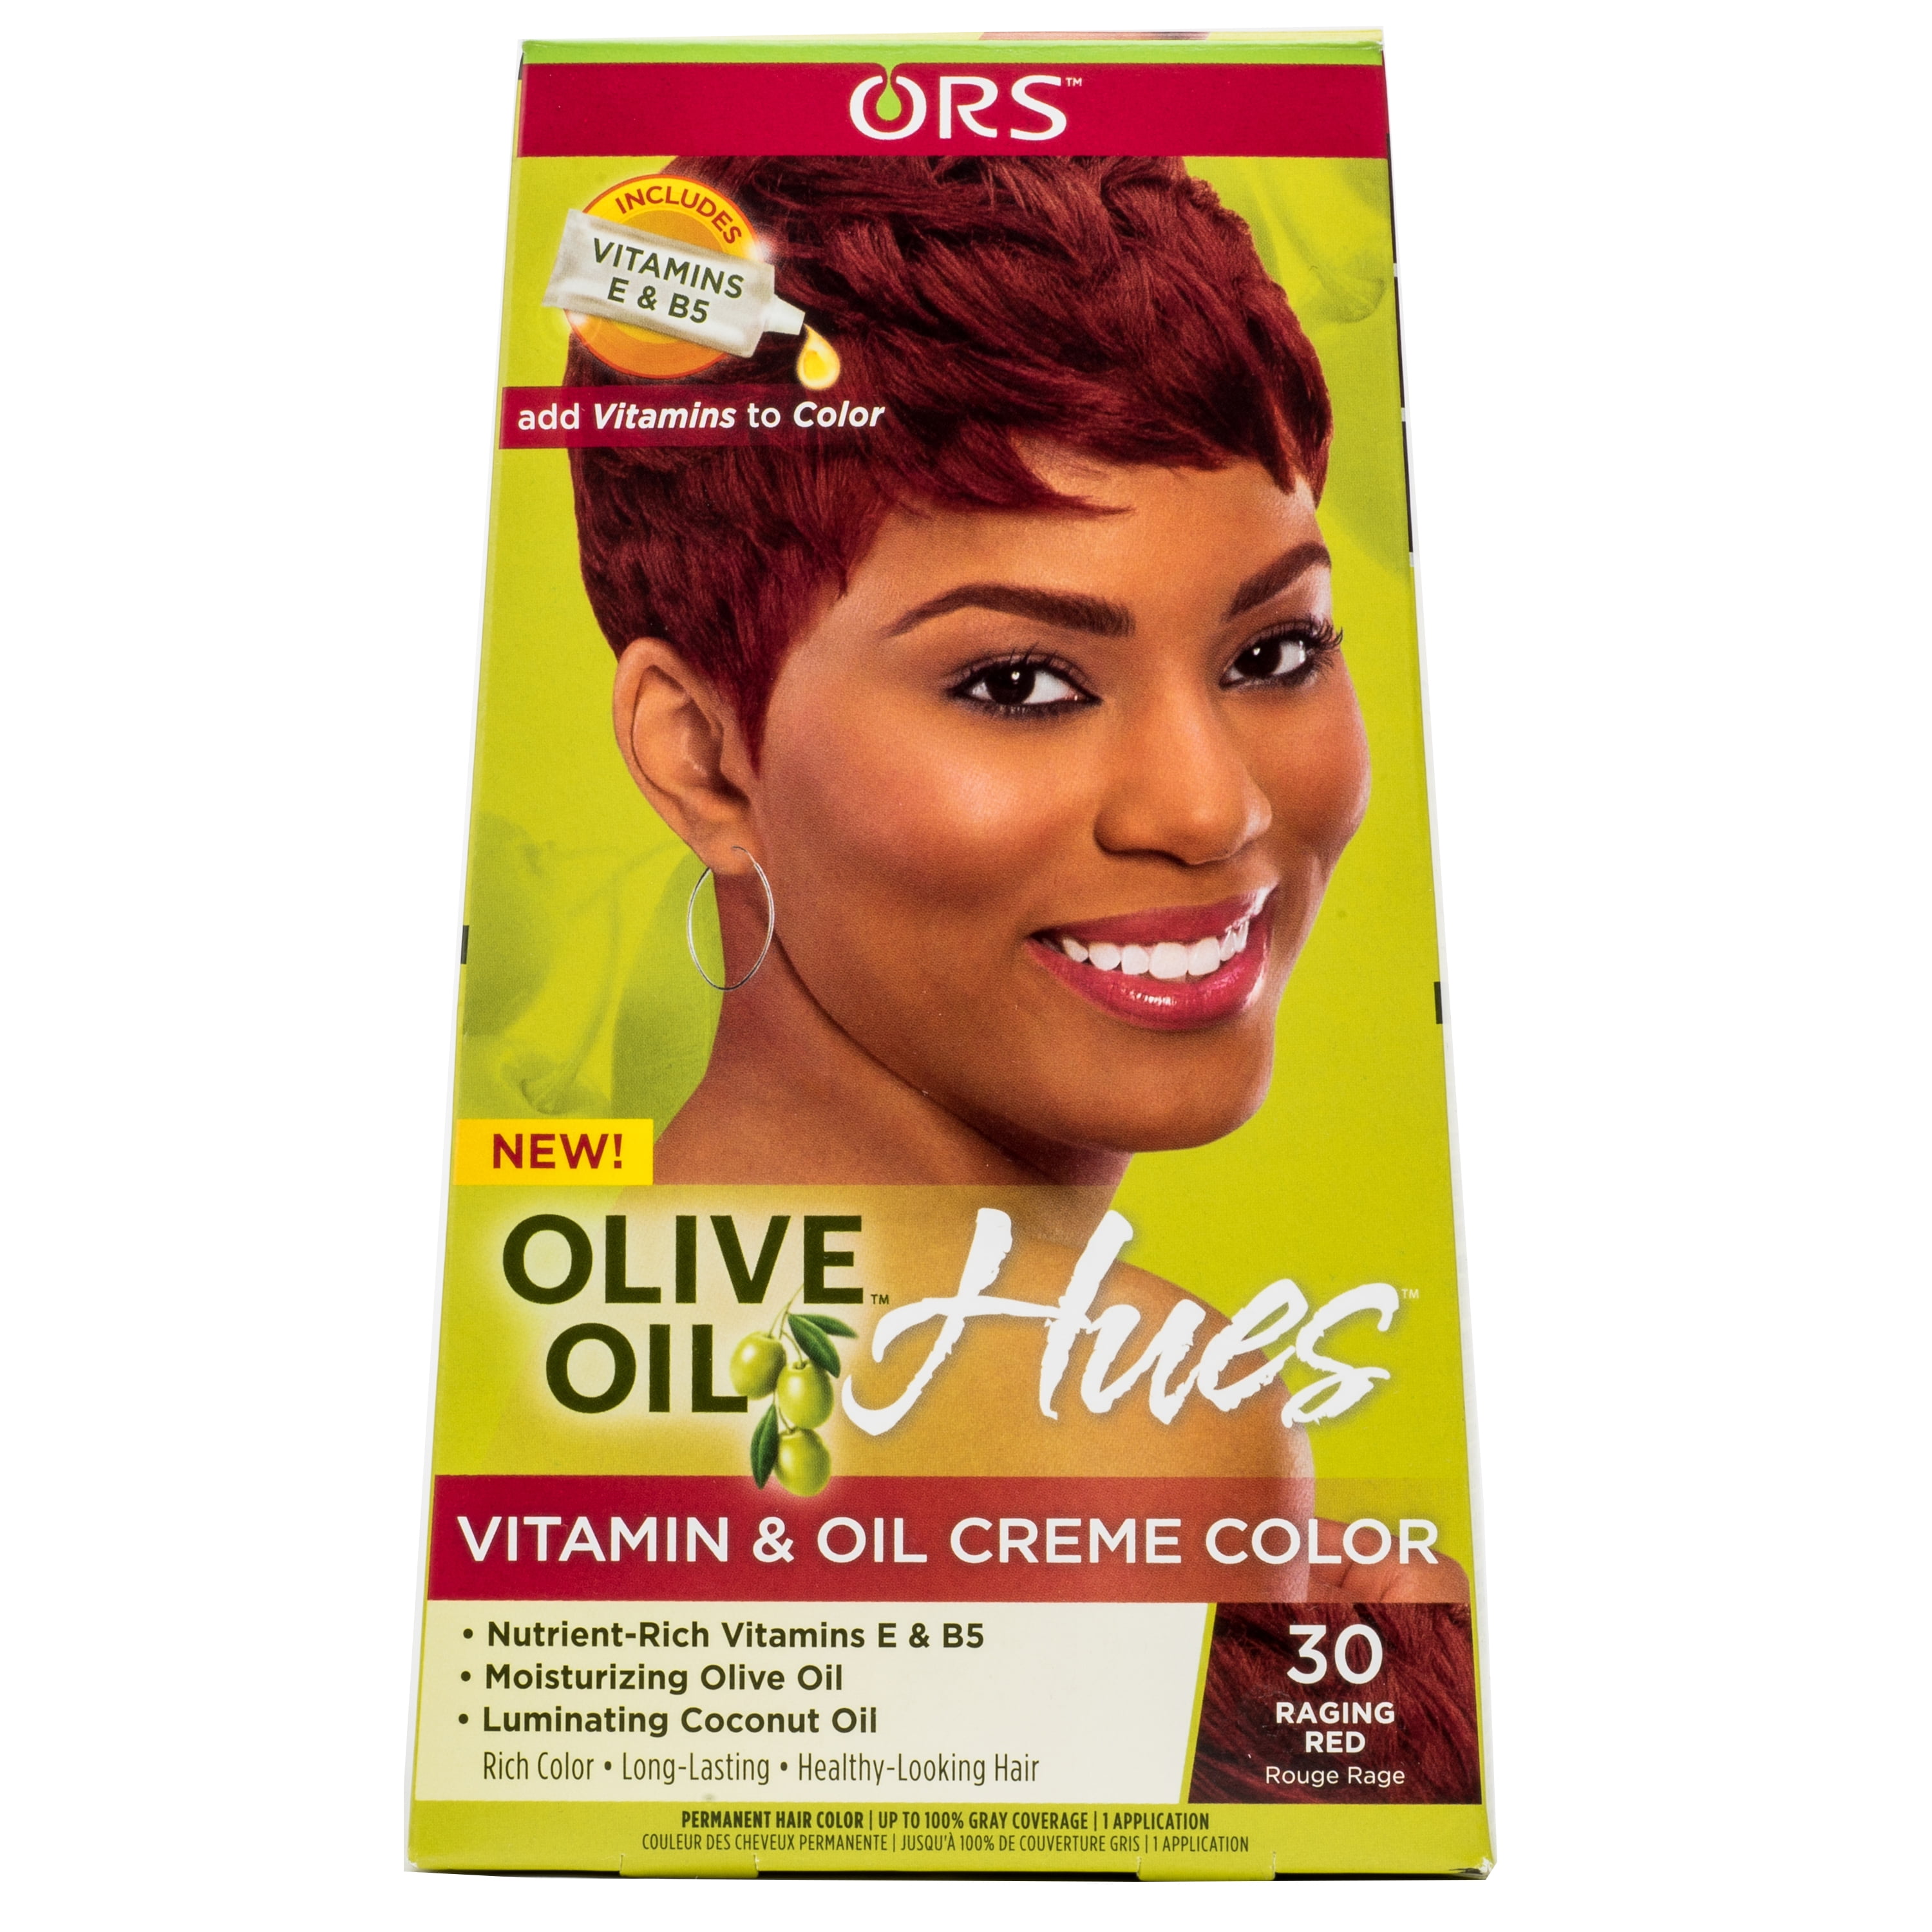 ORS Oil Hues #30 Raging Red Vitamin & Oil Crème Walmart.com